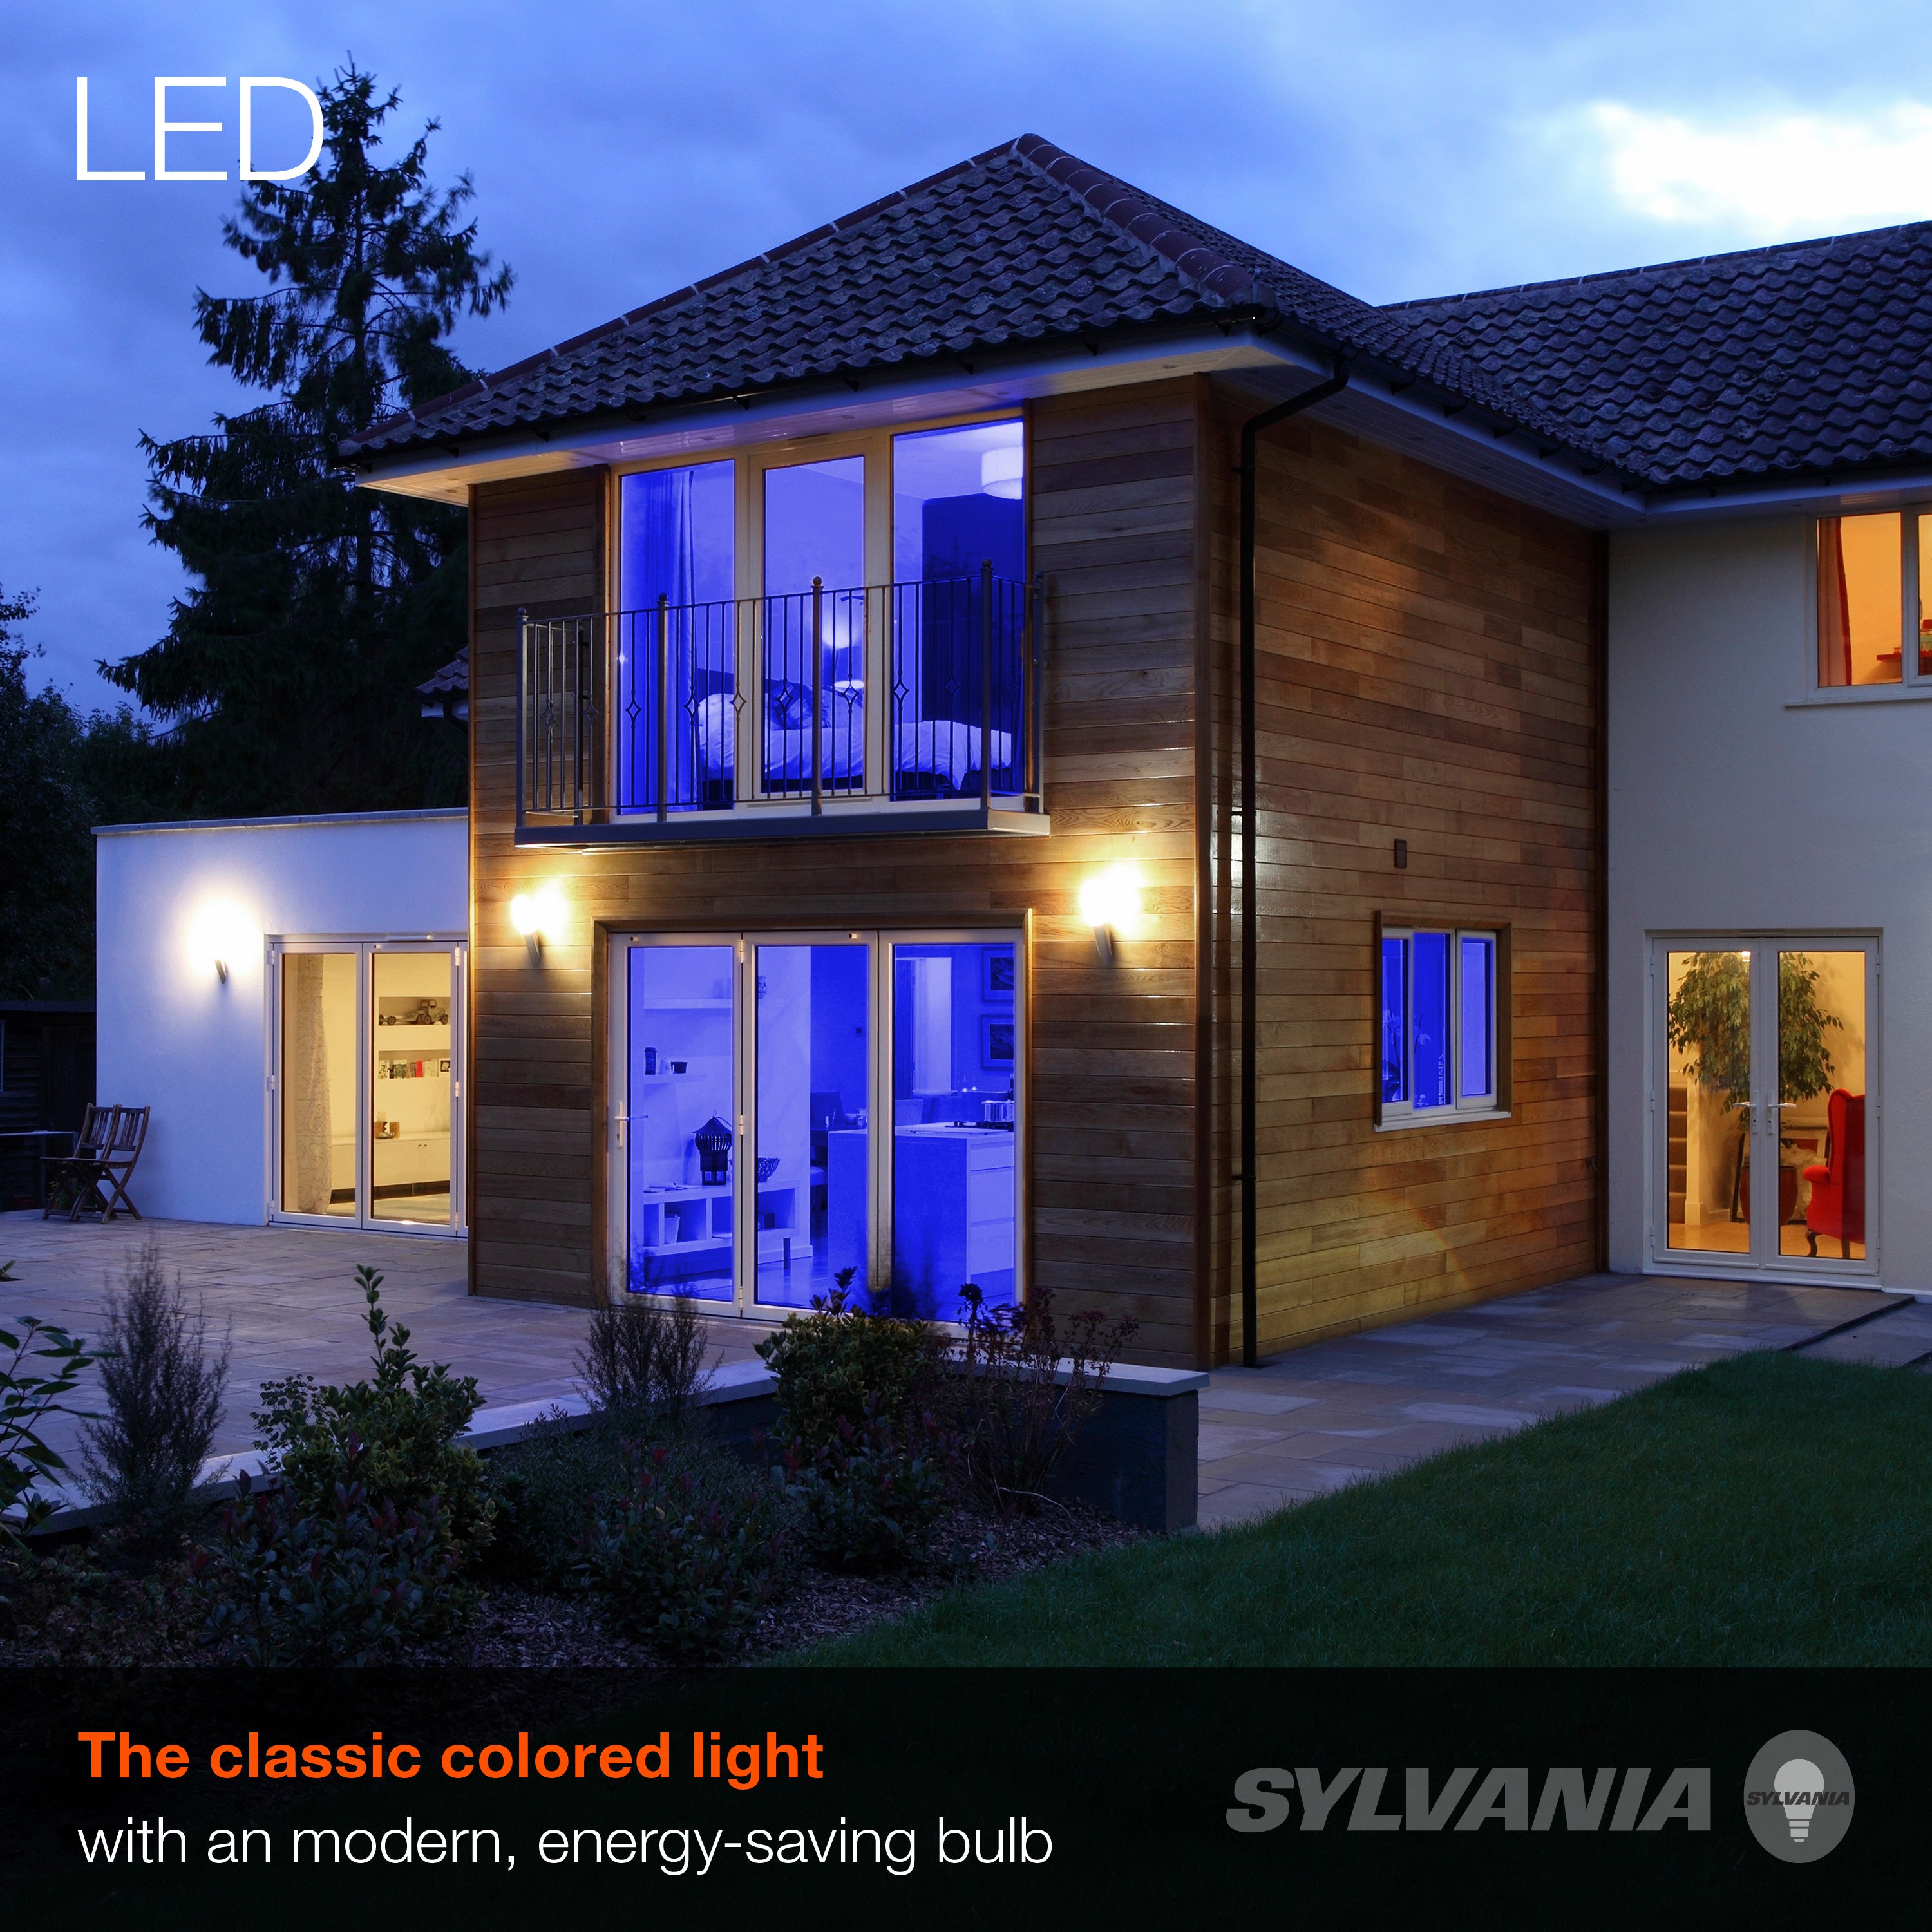 SYLVANIA LED Blue Glass Filament A19 Light Bulb,  40W = 4.5W, Dimmable, E26 Medium Base - 6 Pk